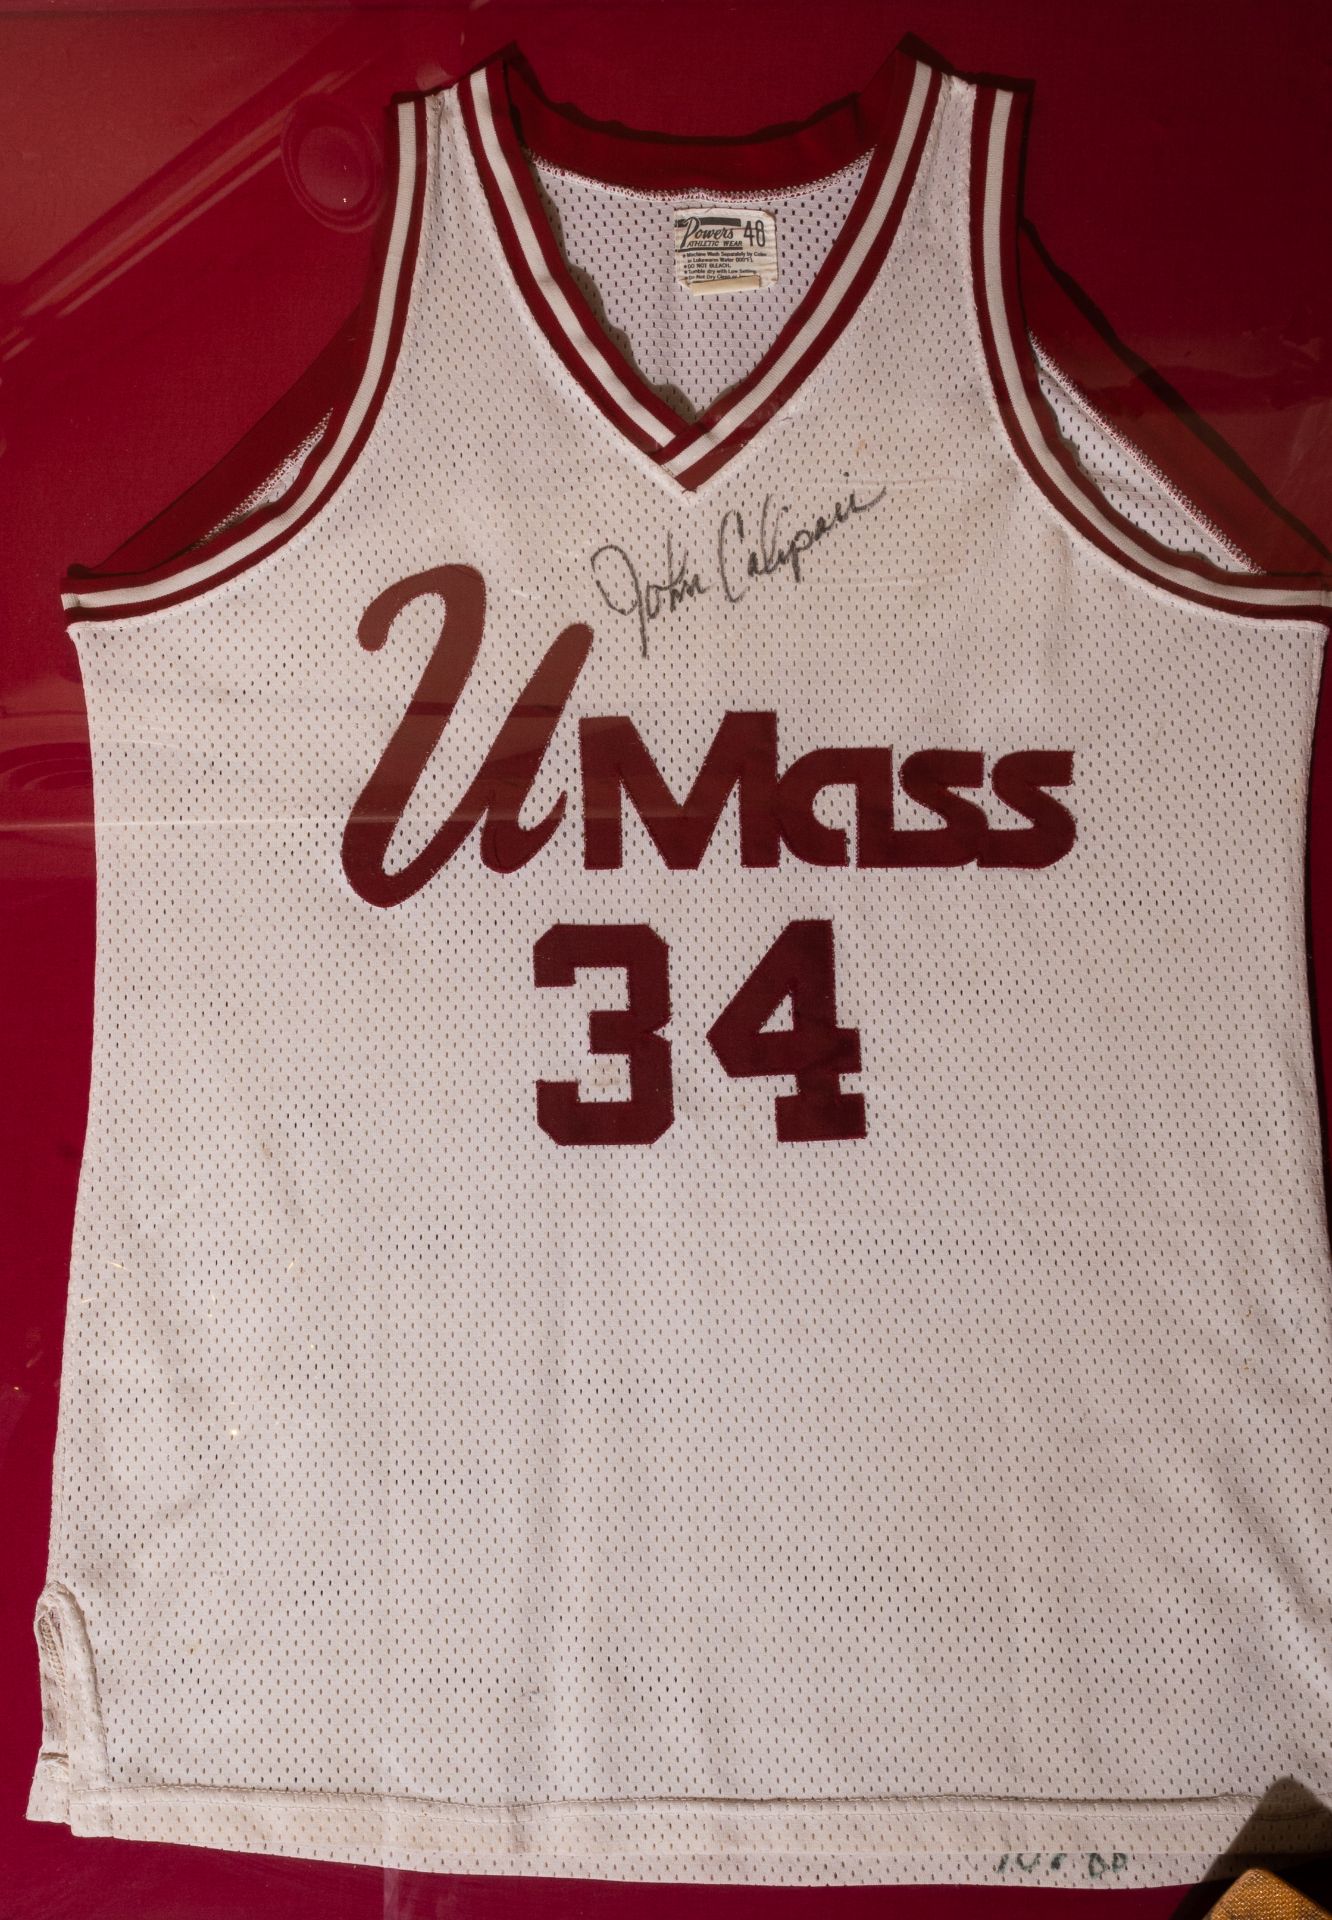 Umass #34 William Herndon Mens Basketball Jersey First Year Coaching Signed "John Calipari" Framed